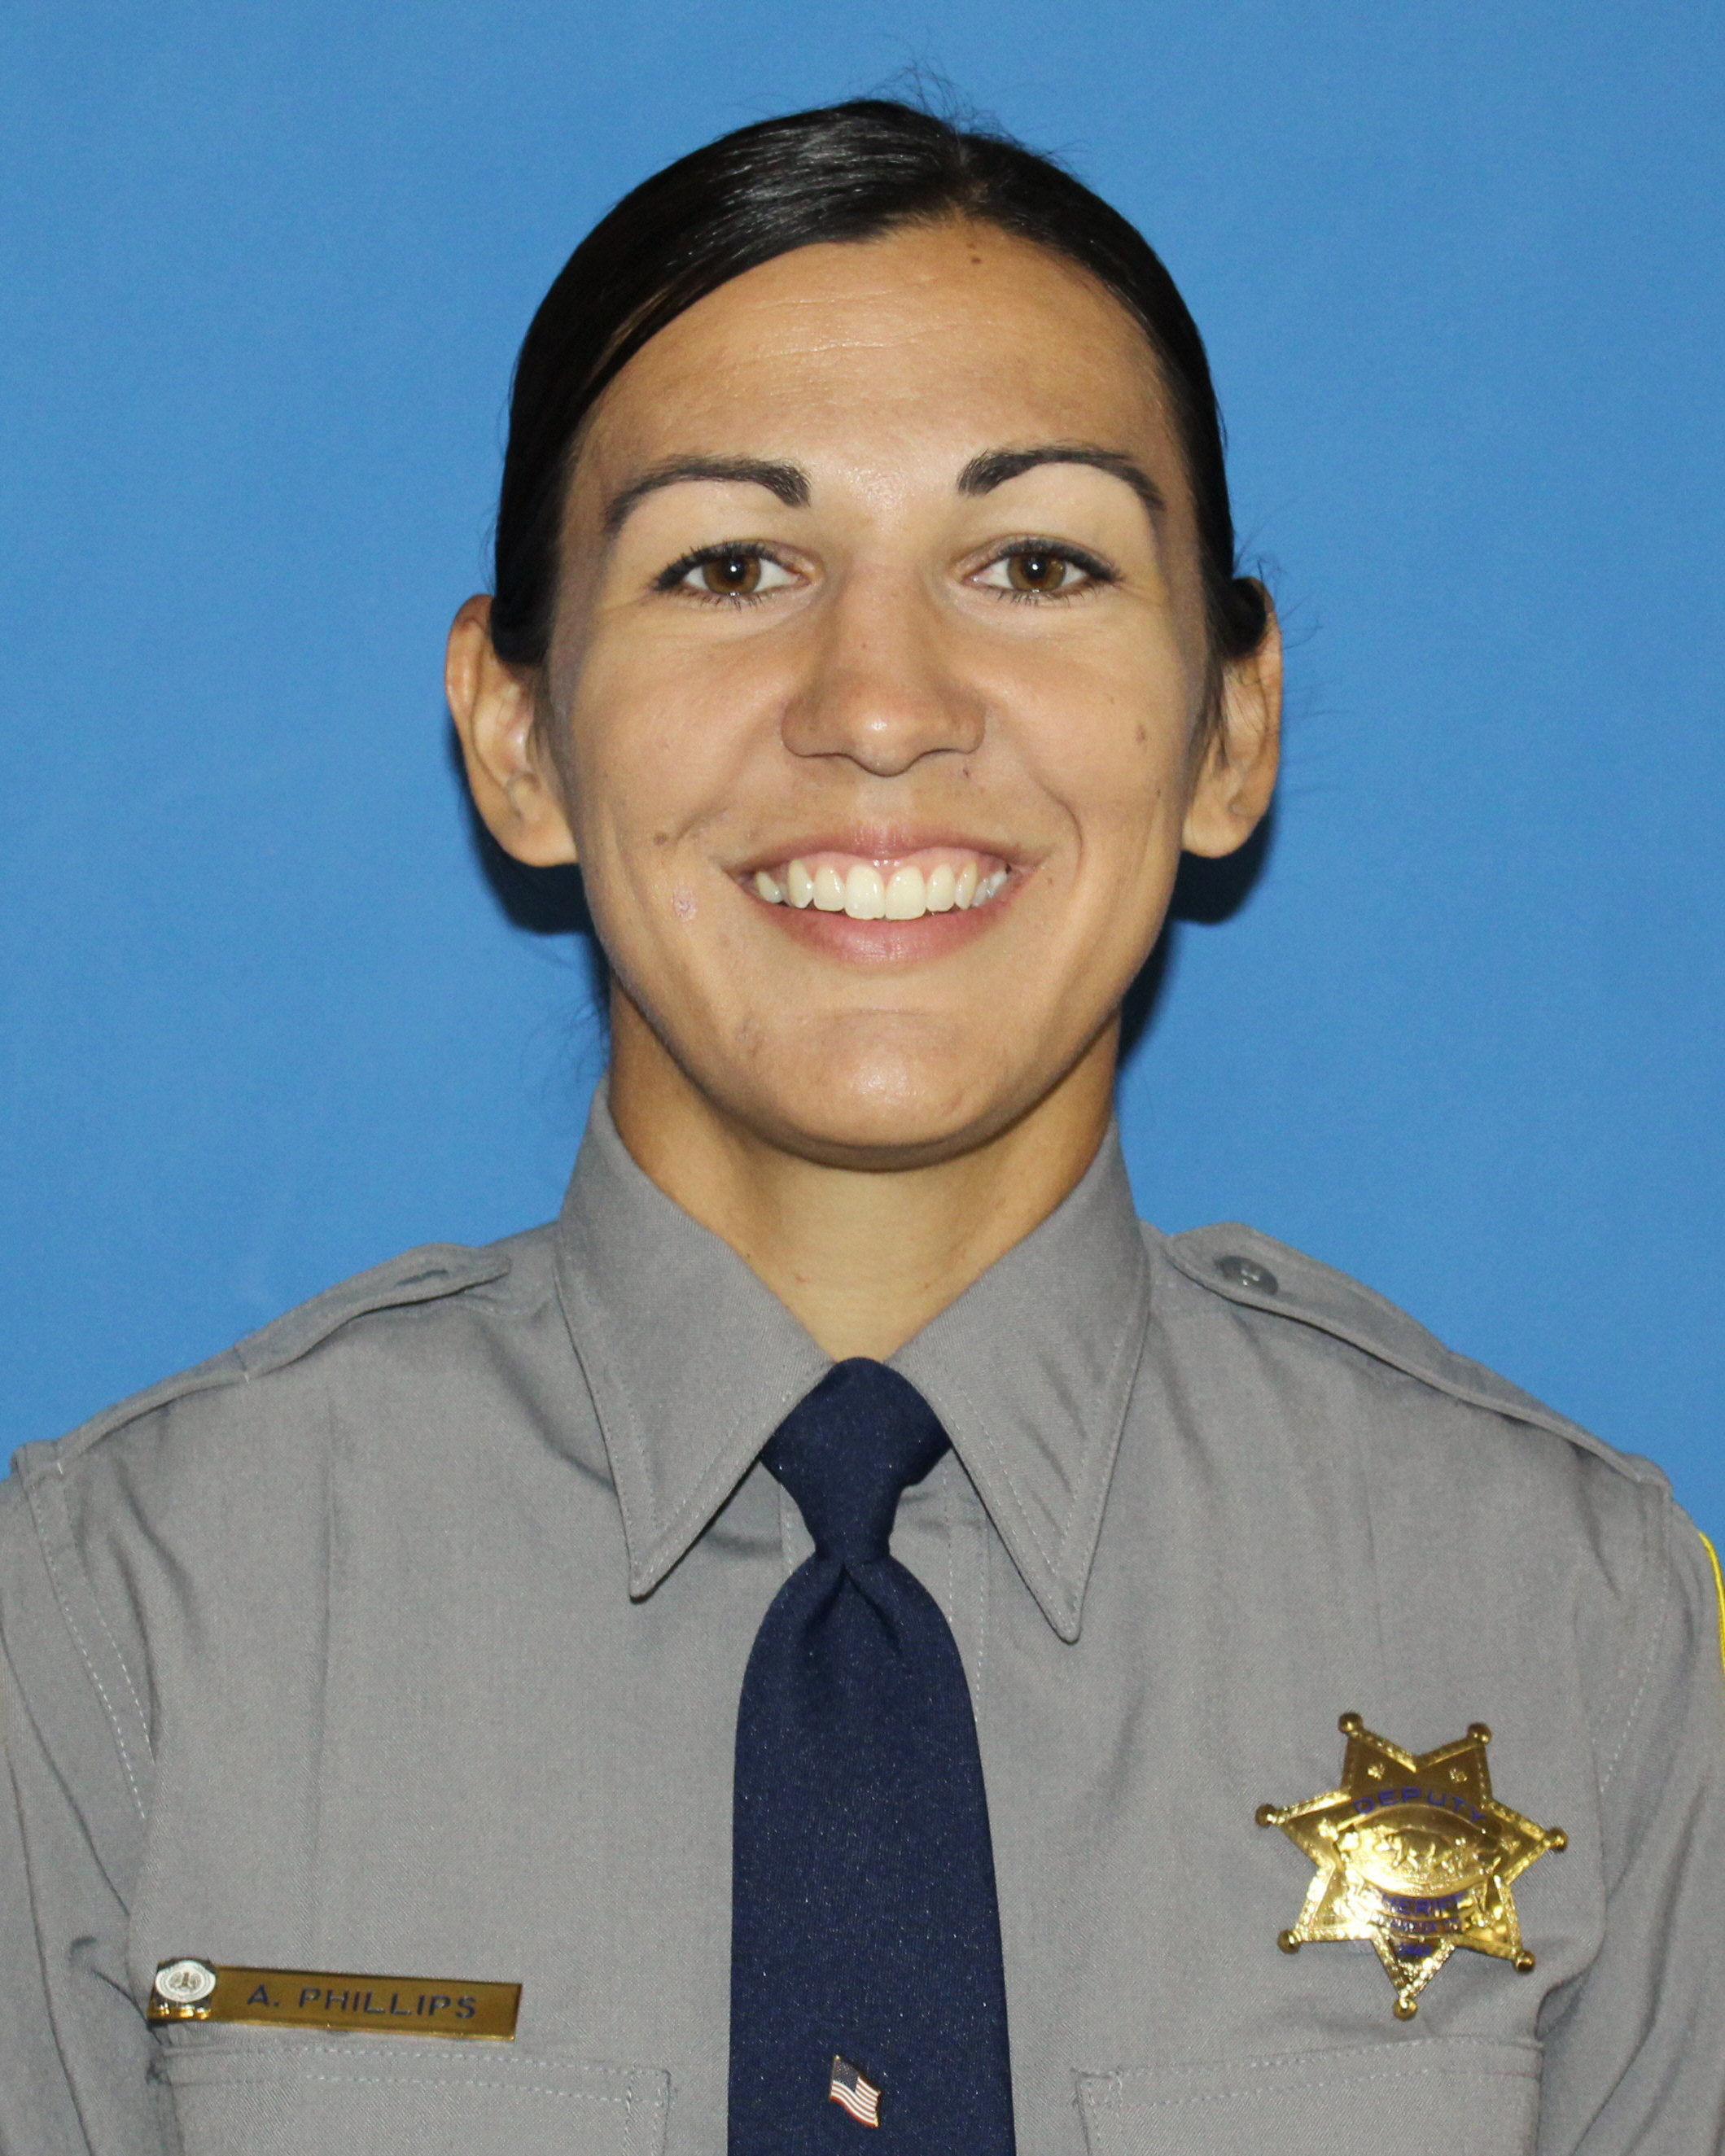 Deputy Sheriff Aubrey Phillips | Alameda County Sheriff's Office, California